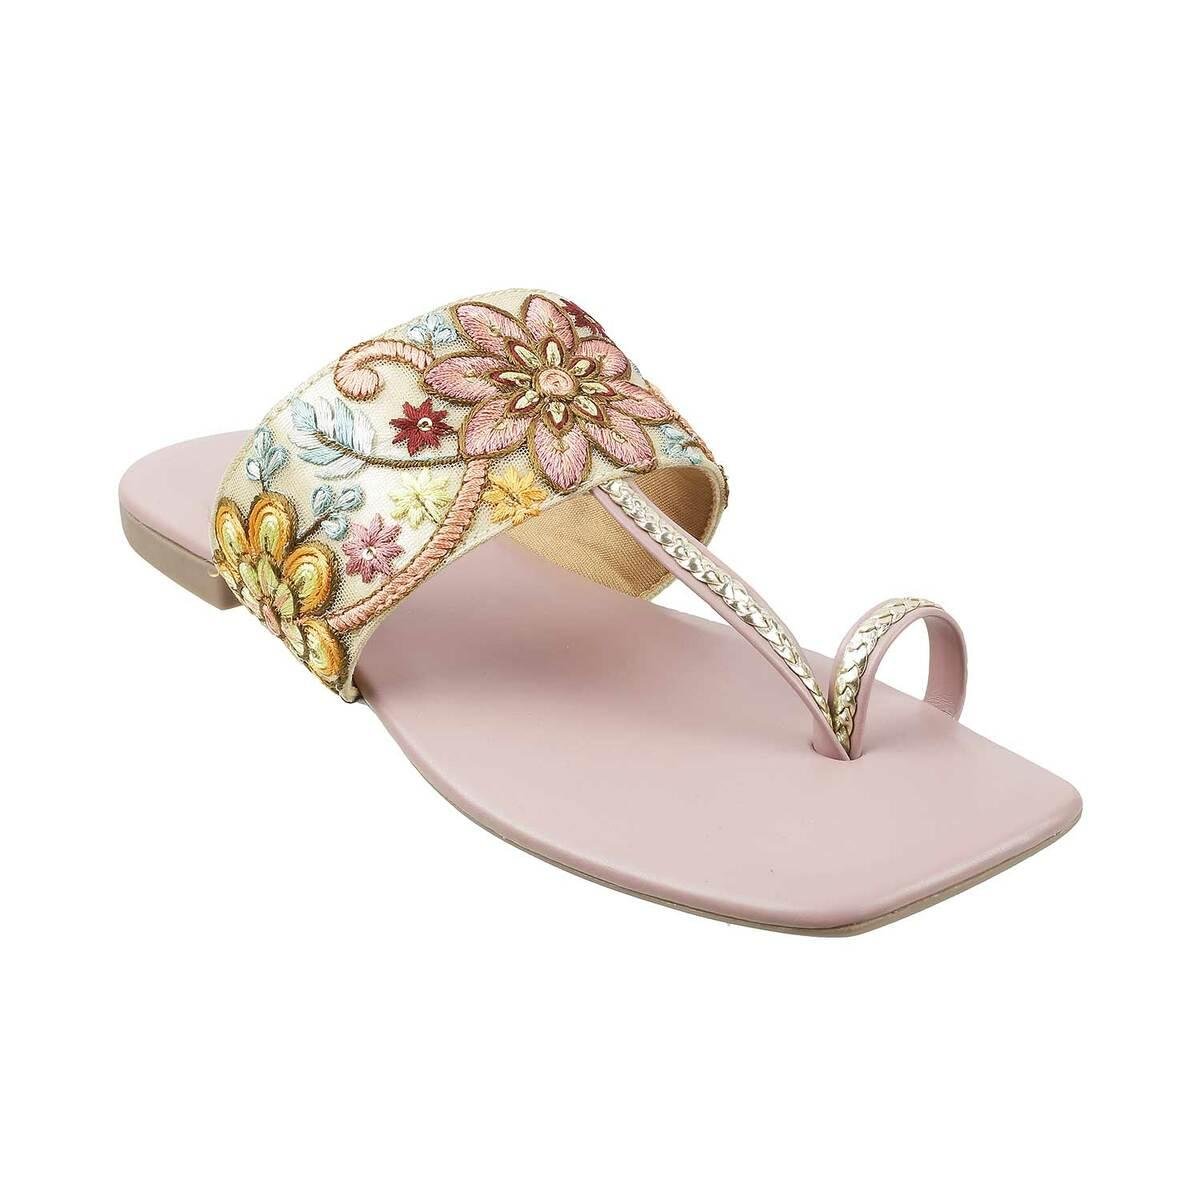 Buy Women Gold Ethnic Slippers Online | SKU: 32-1726-52-36-Metro Shoes